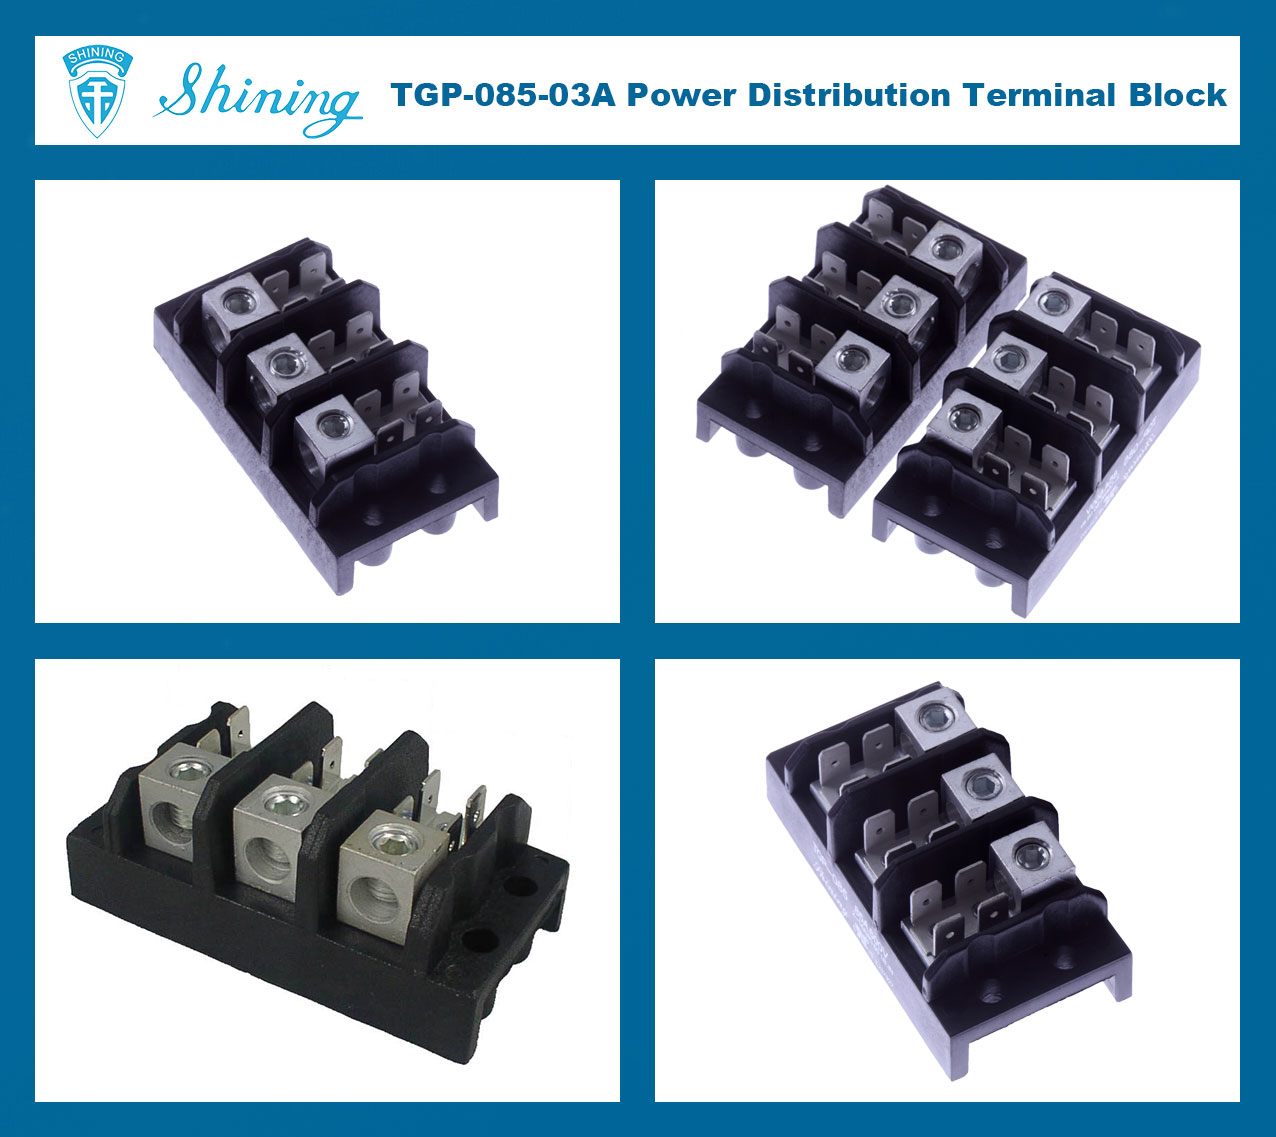 SHINING-TGP-085-03A 600V 85A 3 Pole Electrical Power Terminal Block